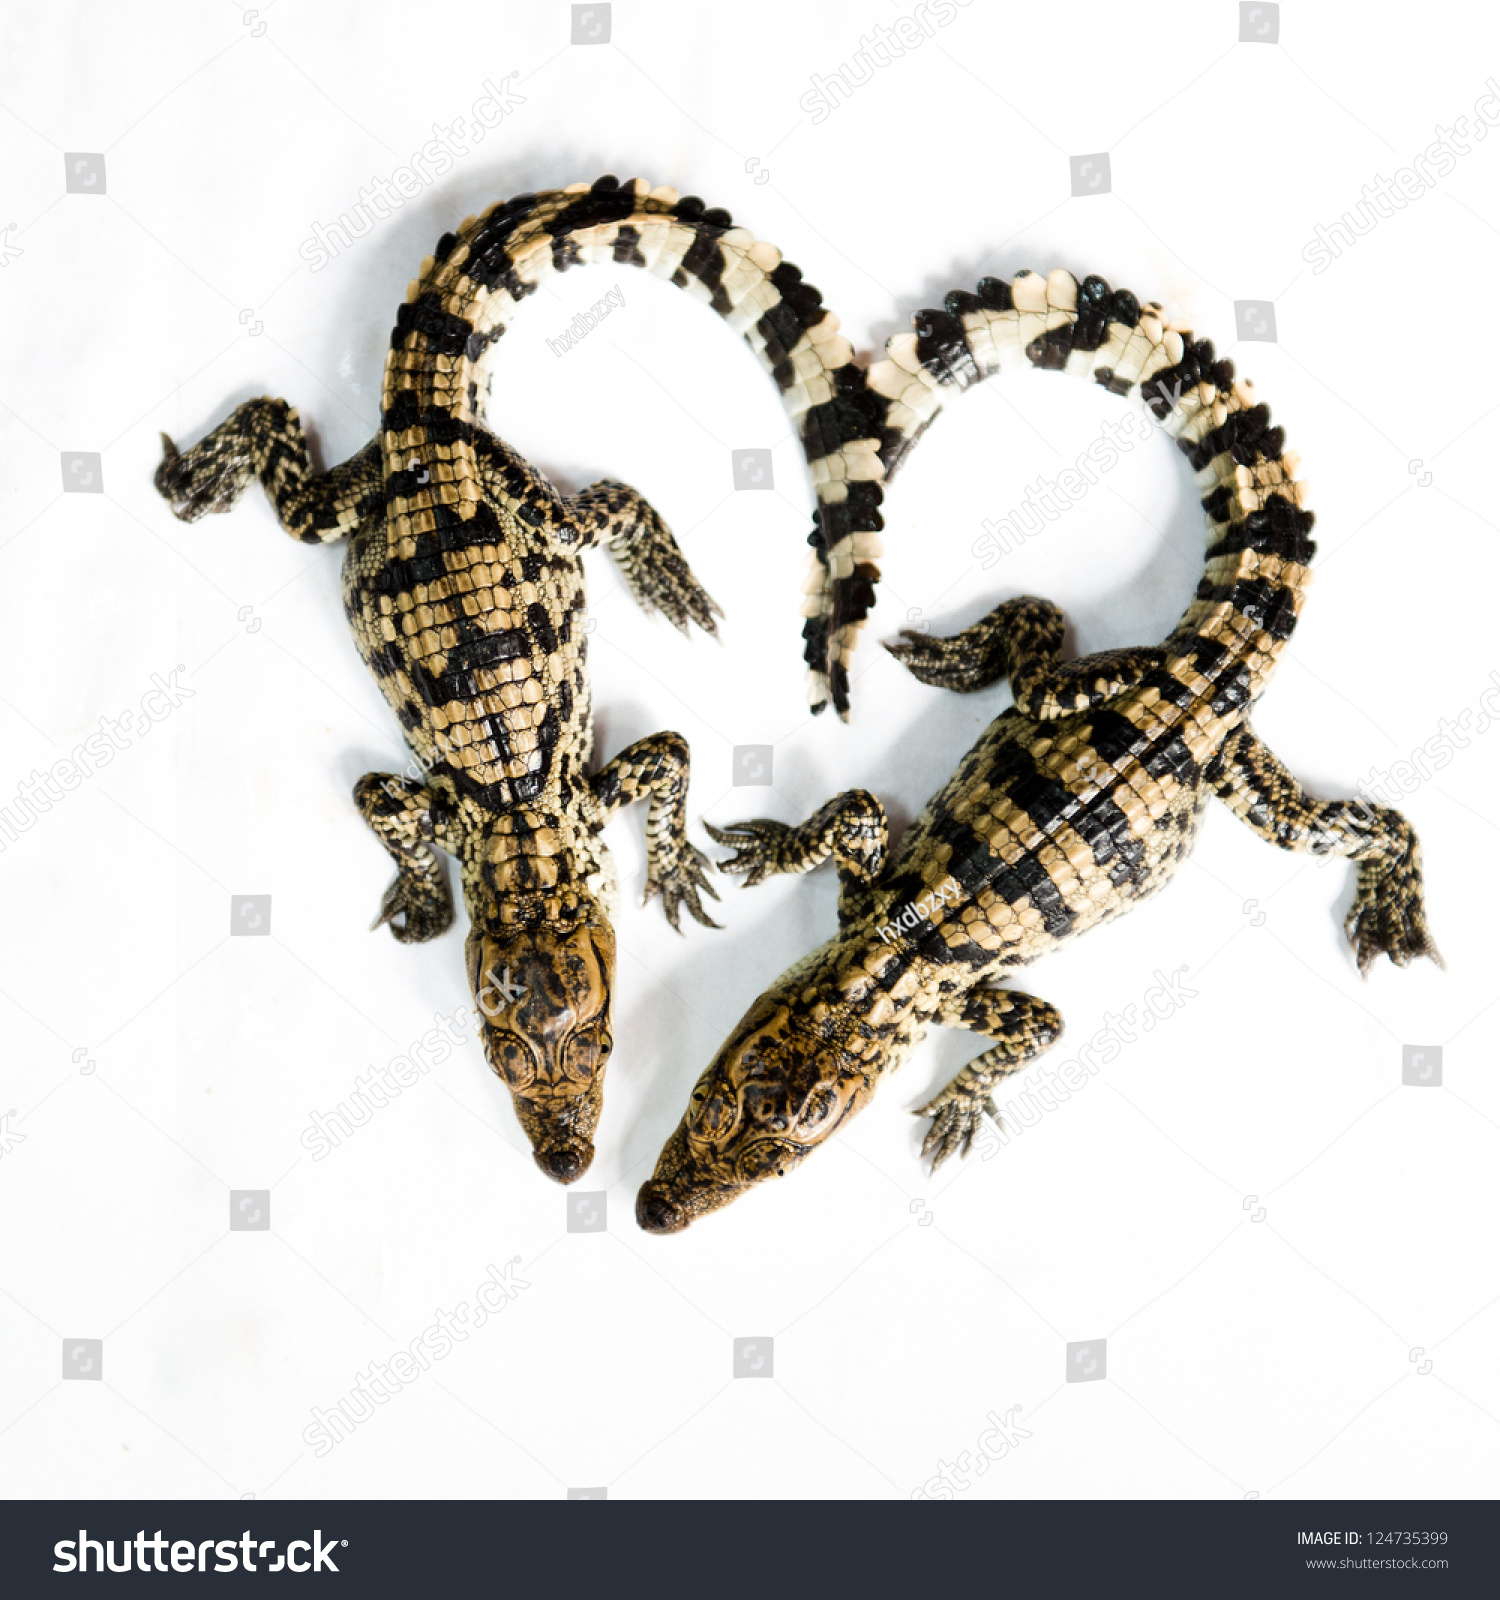 stock-photo-little-baby-crocodile-isolated-on-white-124735399.jpg